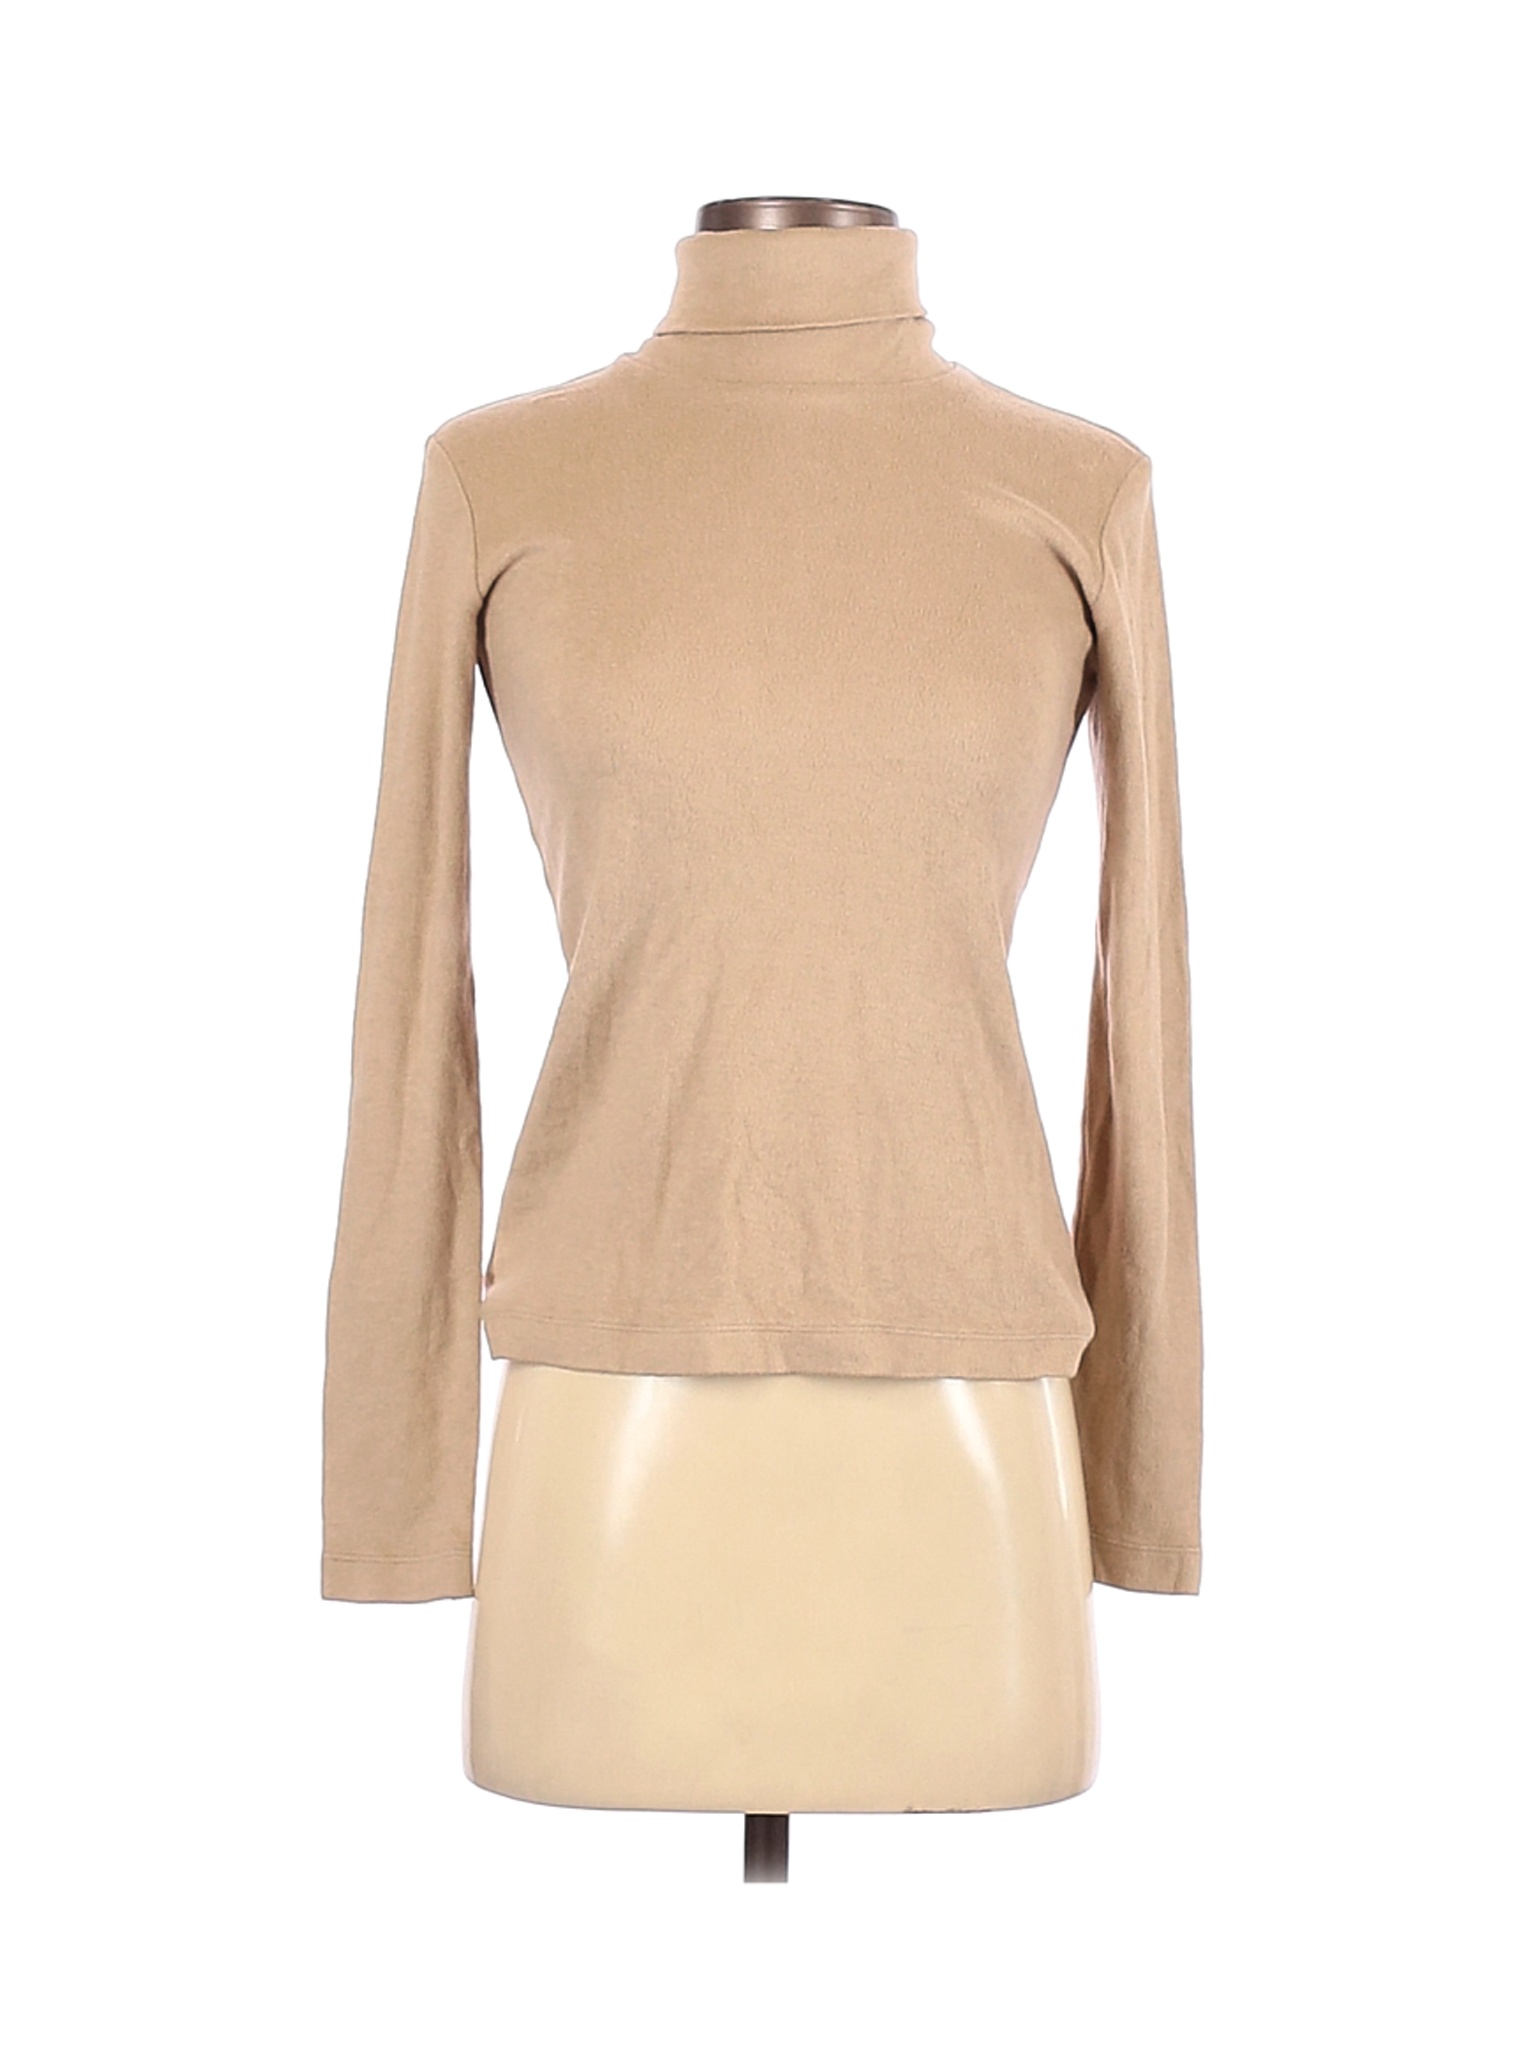 Uniqlo Women Brown Turtleneck Sweater S | eBay